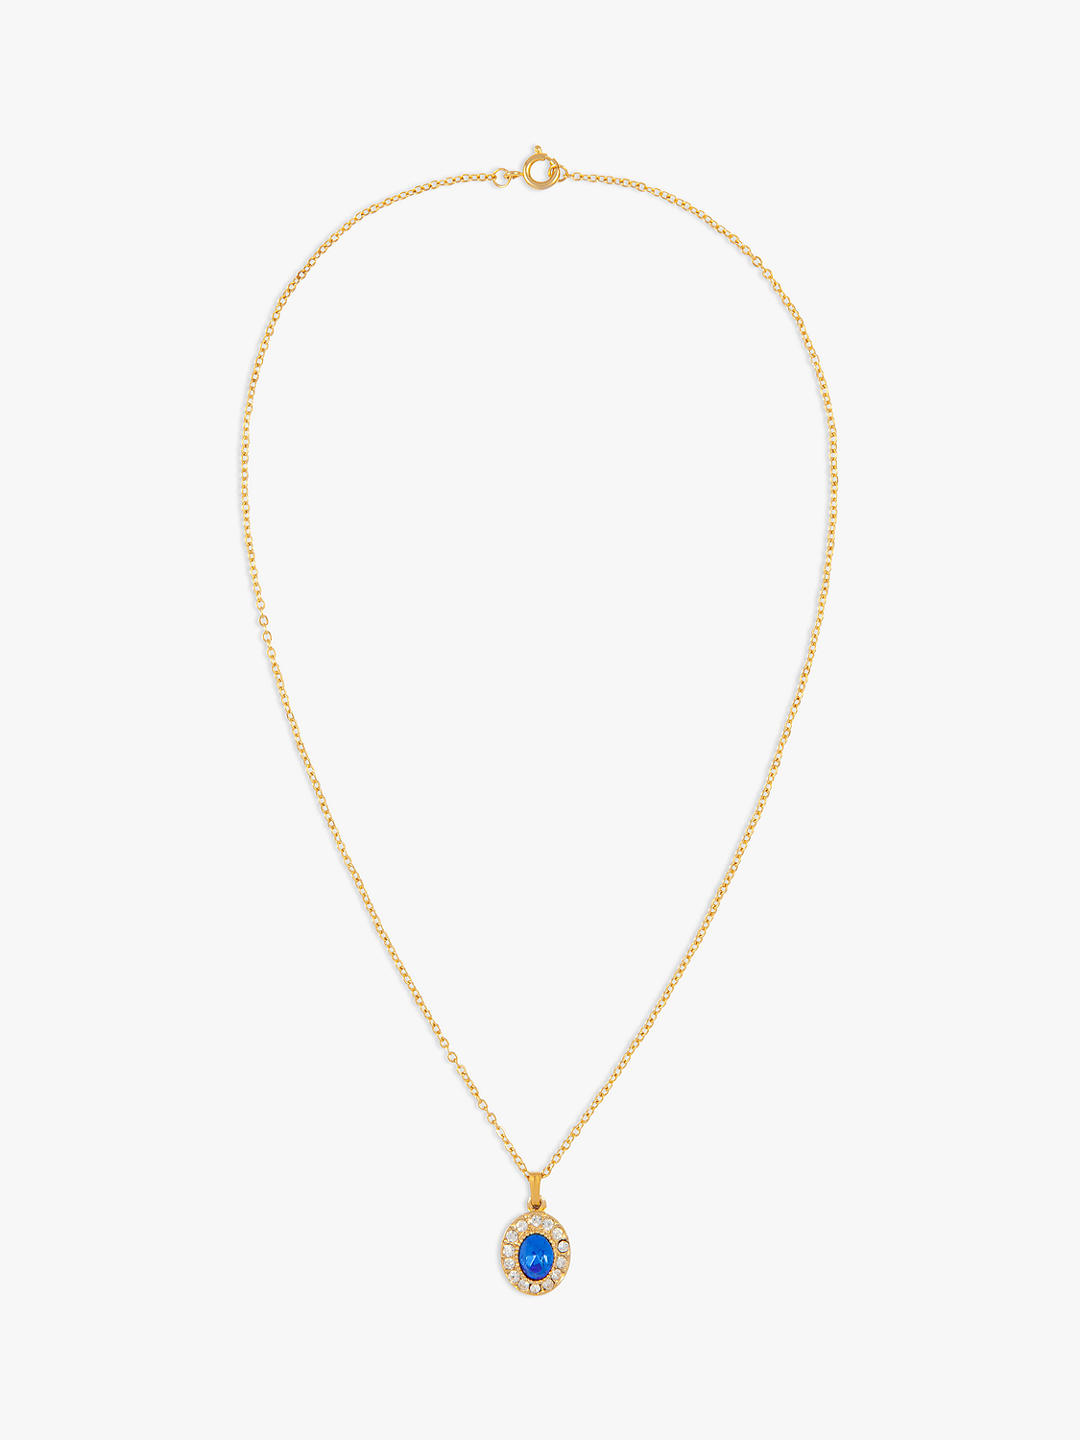 Susan Caplan Vintage Rediscovered Collection Gold Plated Swarovski Crystal Oval Pendant Necklace, Gold/Blue